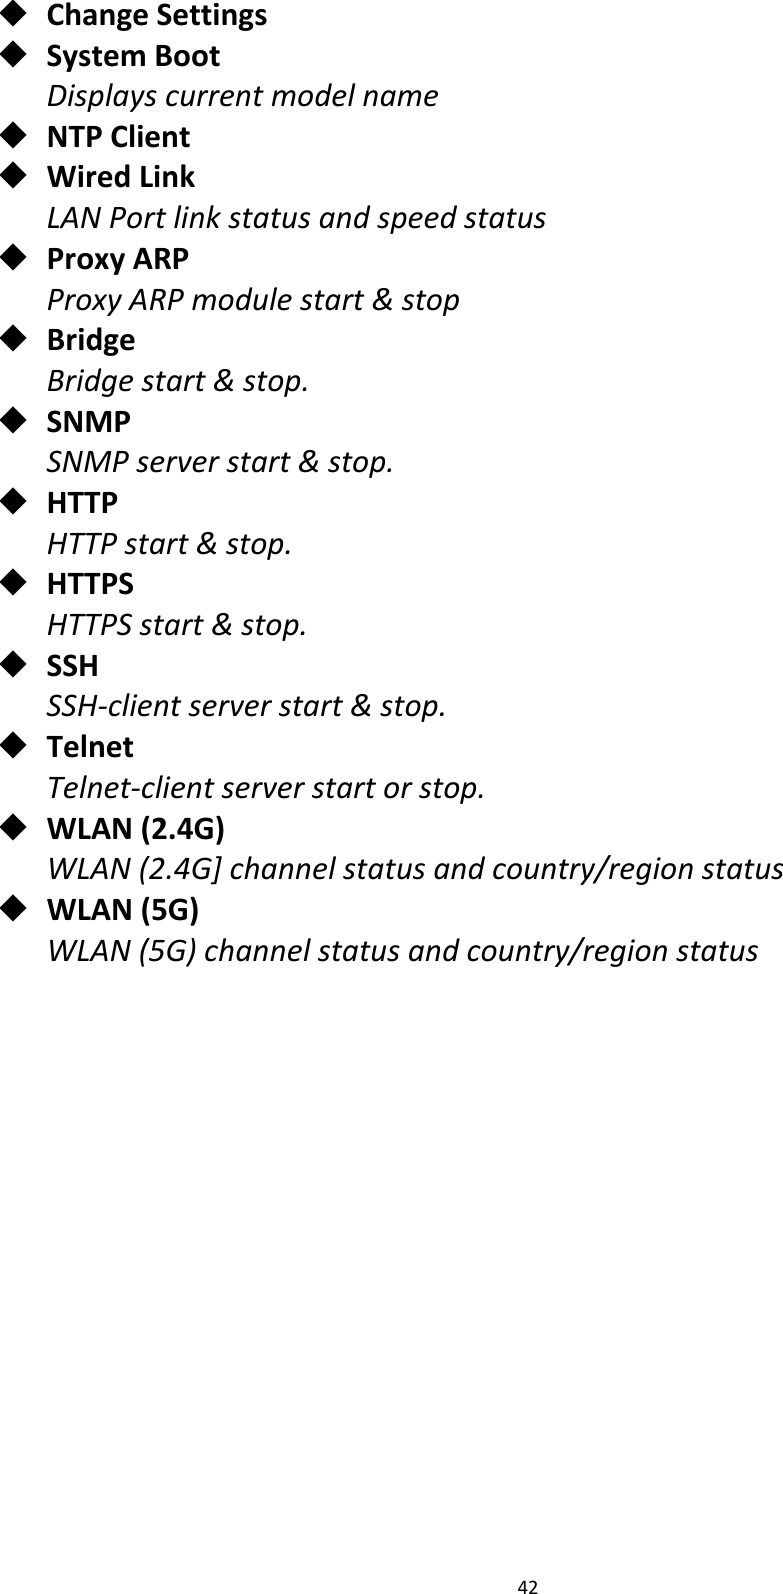 42 ChangeSettings SystemBootDisplayscurrentmodelname NTPClient WiredLinkLANPortlinkstatusandspeedstatus ProxyARPProxyARPmodulestart&amp;stop BridgeBridgestart&amp;stop. SNMPSNMPserverstart&amp;stop. HTTPHTTPstart&amp;stop. HTTPSHTTPSstart&amp;stop. SSHSSH‐clientserverstart&amp;stop. TelnetTelnet‐clientserverstartorstop. WLAN(2.4G)WLAN(2.4G]channelstatusandcountry/regionstatus WLAN(5G)WLAN(5G)channelstatusandcountry/regionstatus